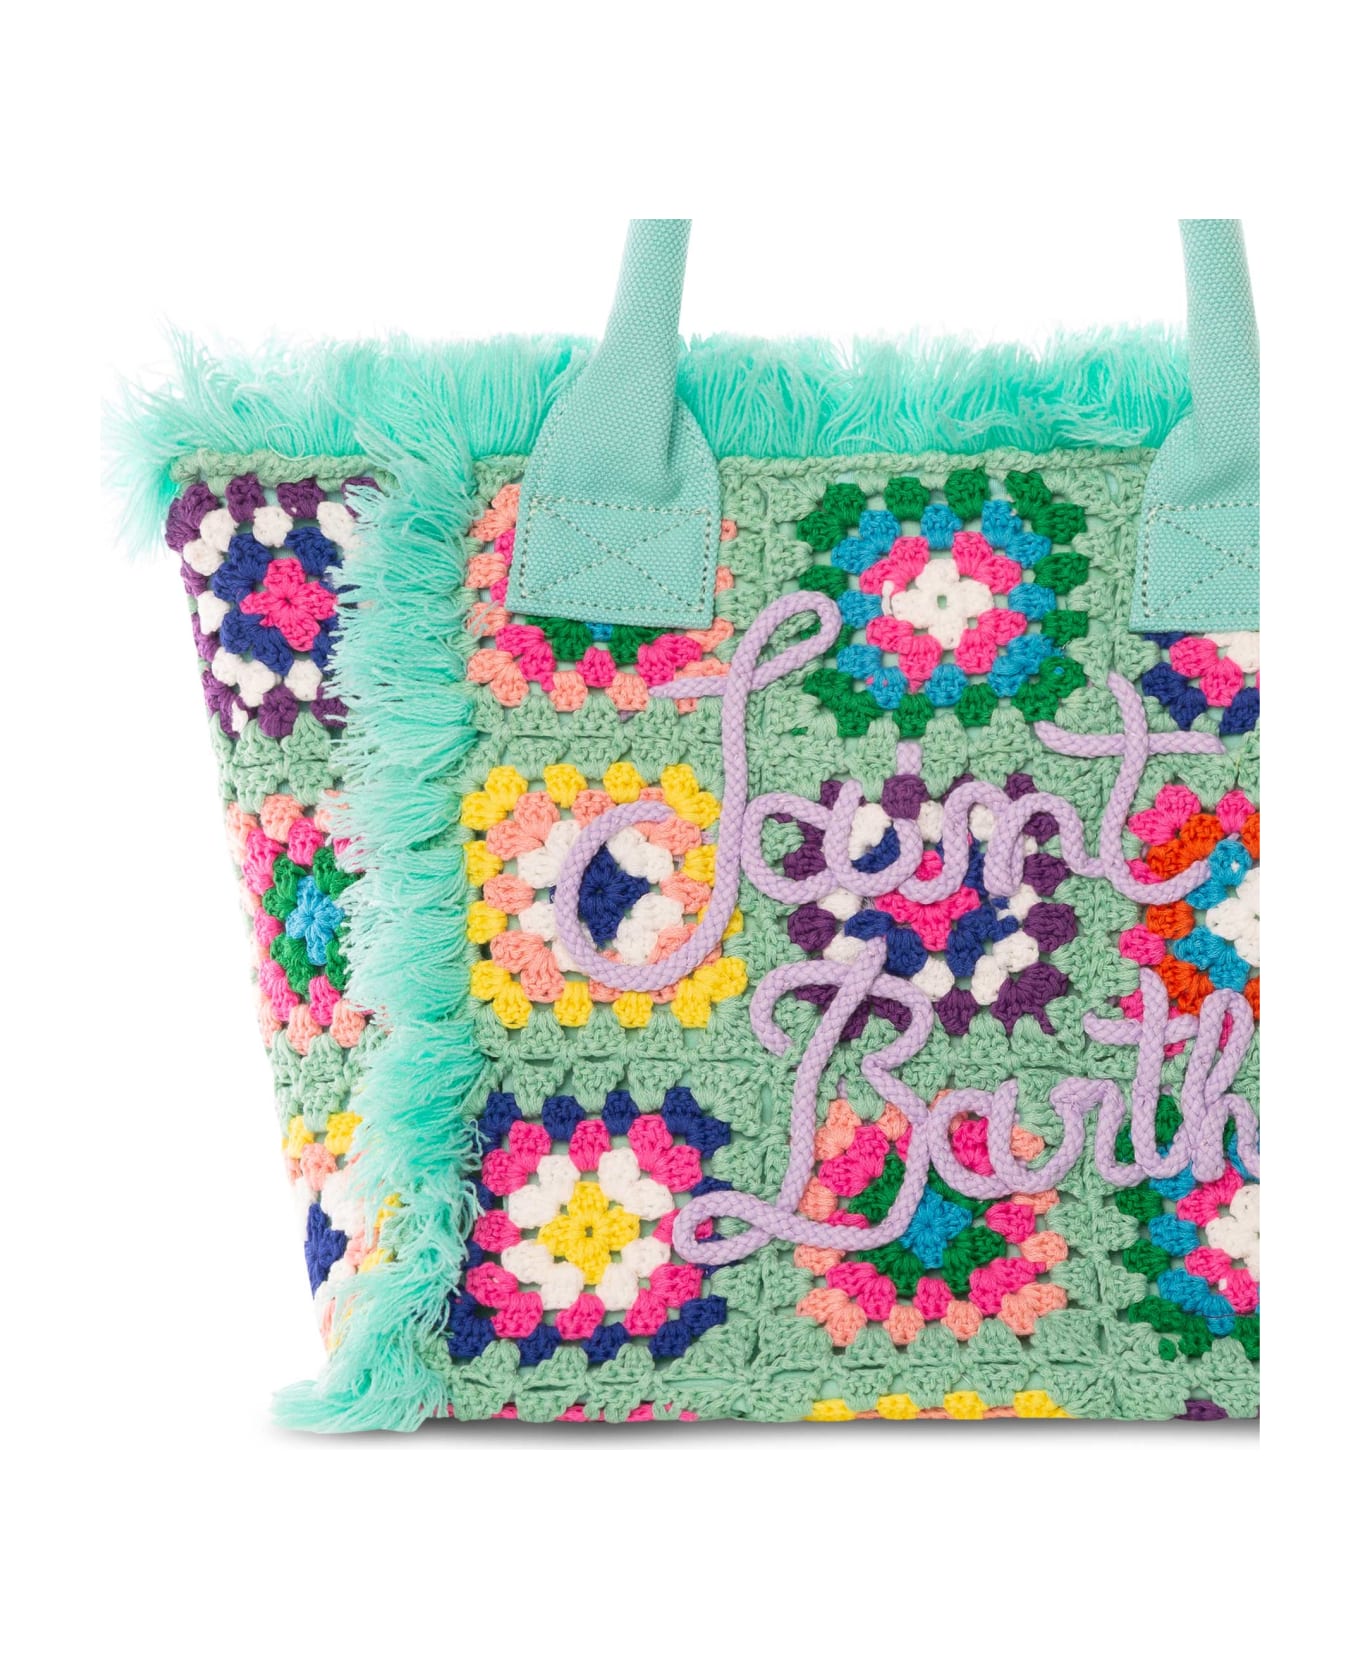 MC2 Saint Barth Vanity Crochet Shoulder Bag - GREEN トートバッグ